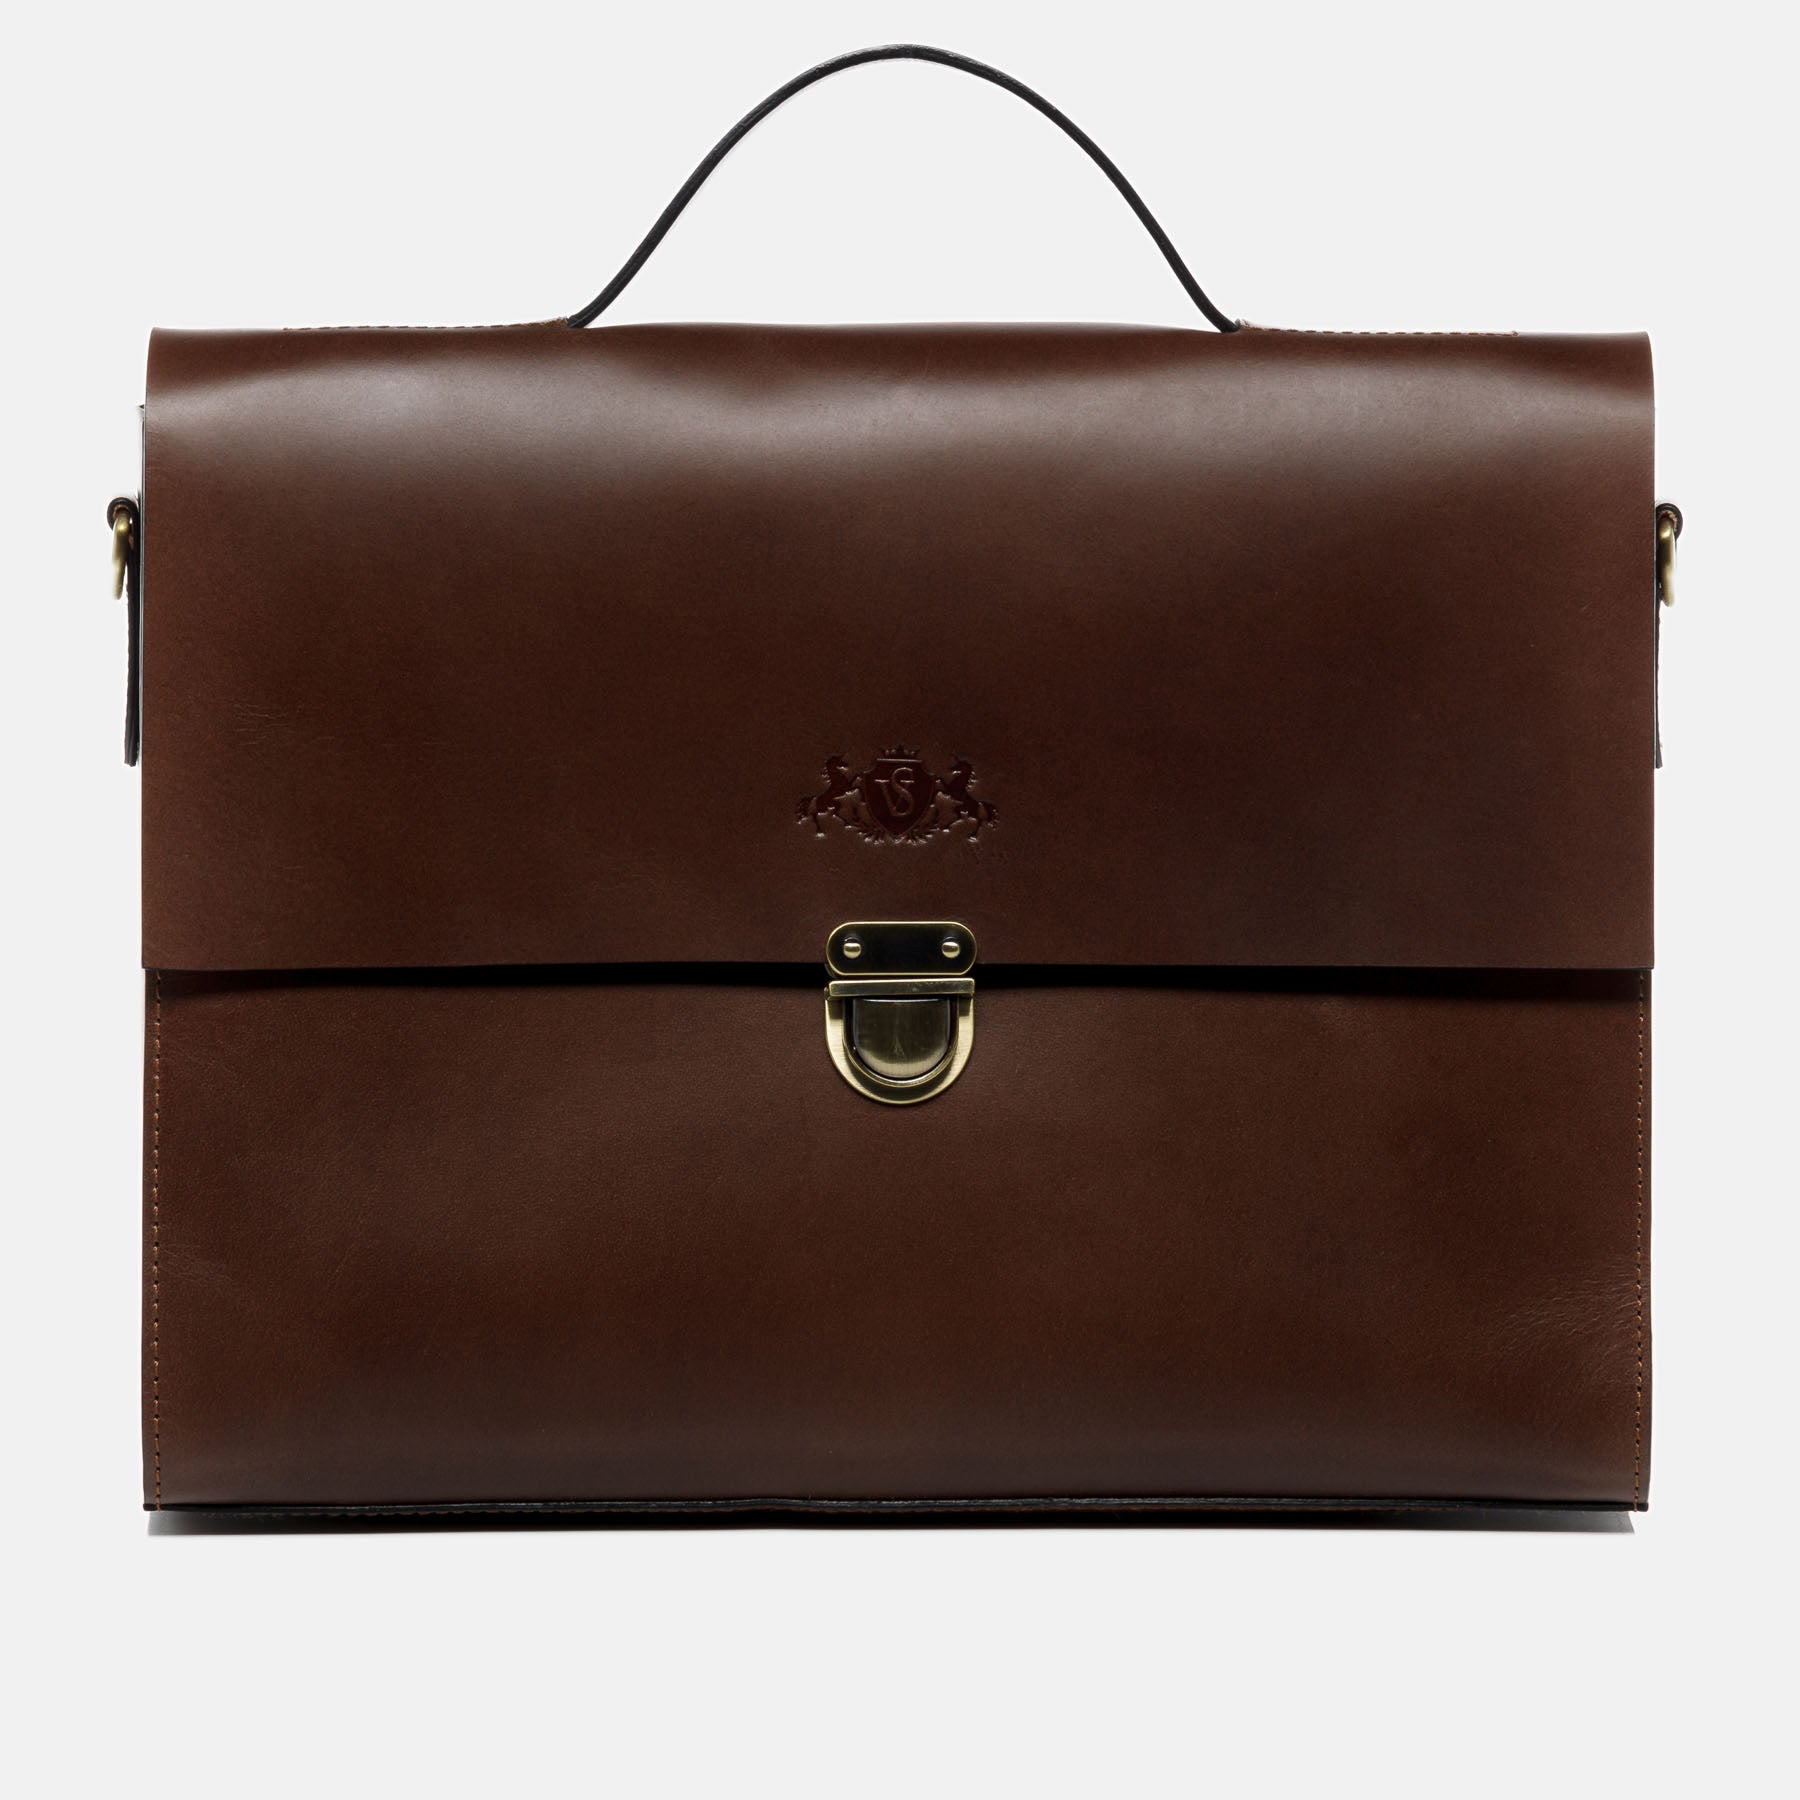 Briefcase TRISH saddle leather light brown